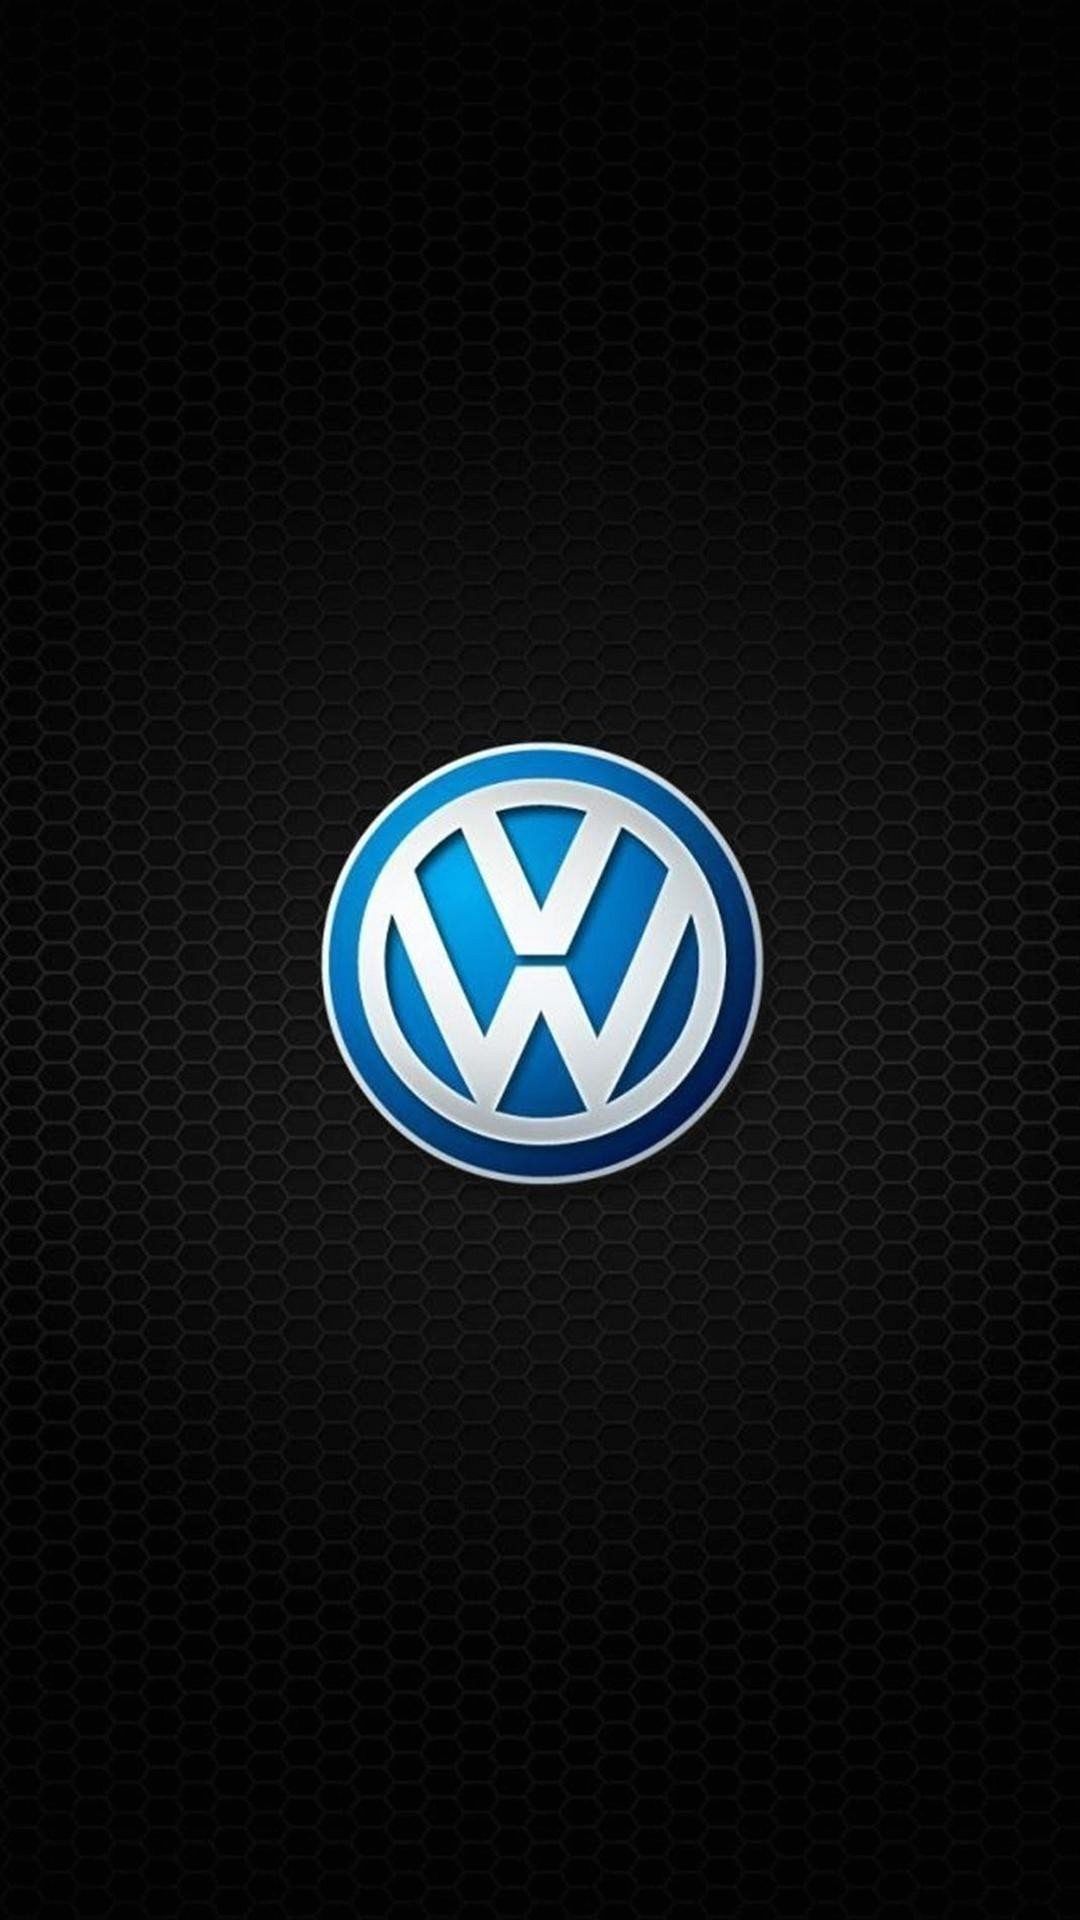 Mobile Volkswagen Logo Wallpaper. Full HD Picture